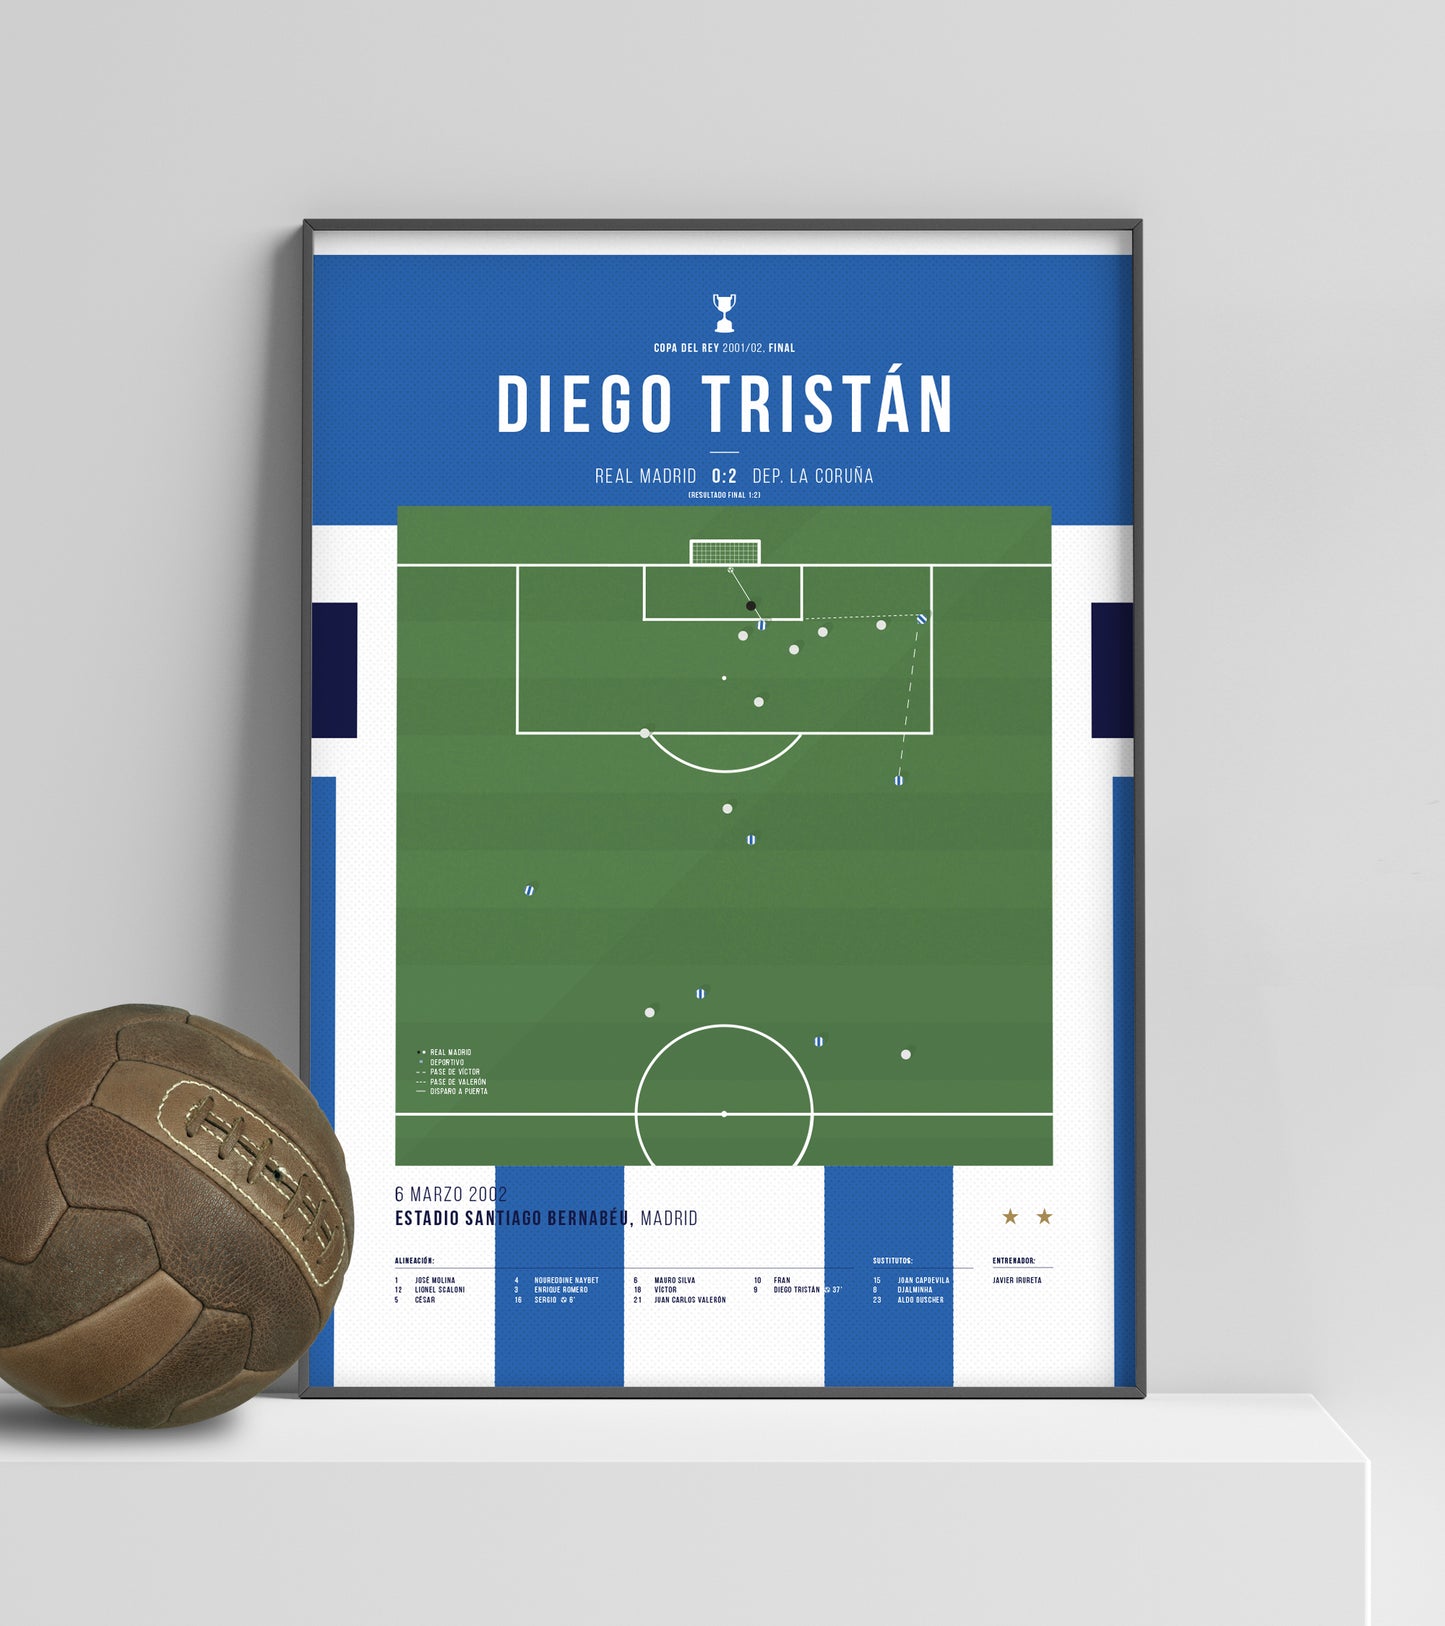 Le but de Diego Tristán lors de la victoire historique du Deportivos "Centenariazo" au Bernabéu